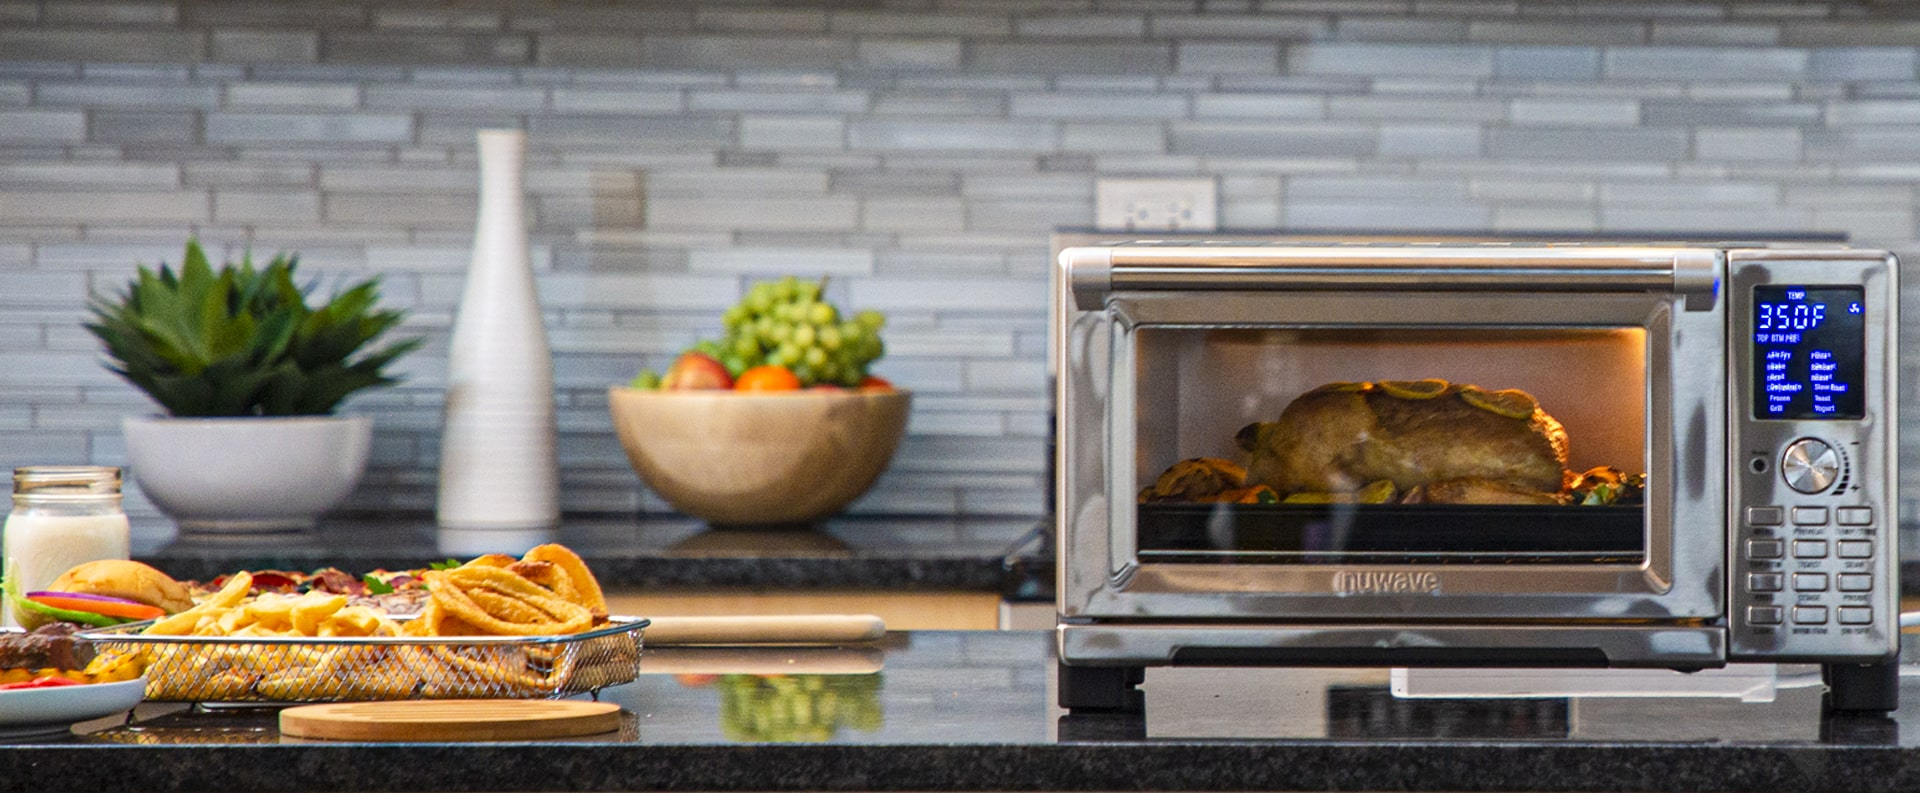  Nuwave Bravo 12-in-1 Digital Toaster Oven, Countertop